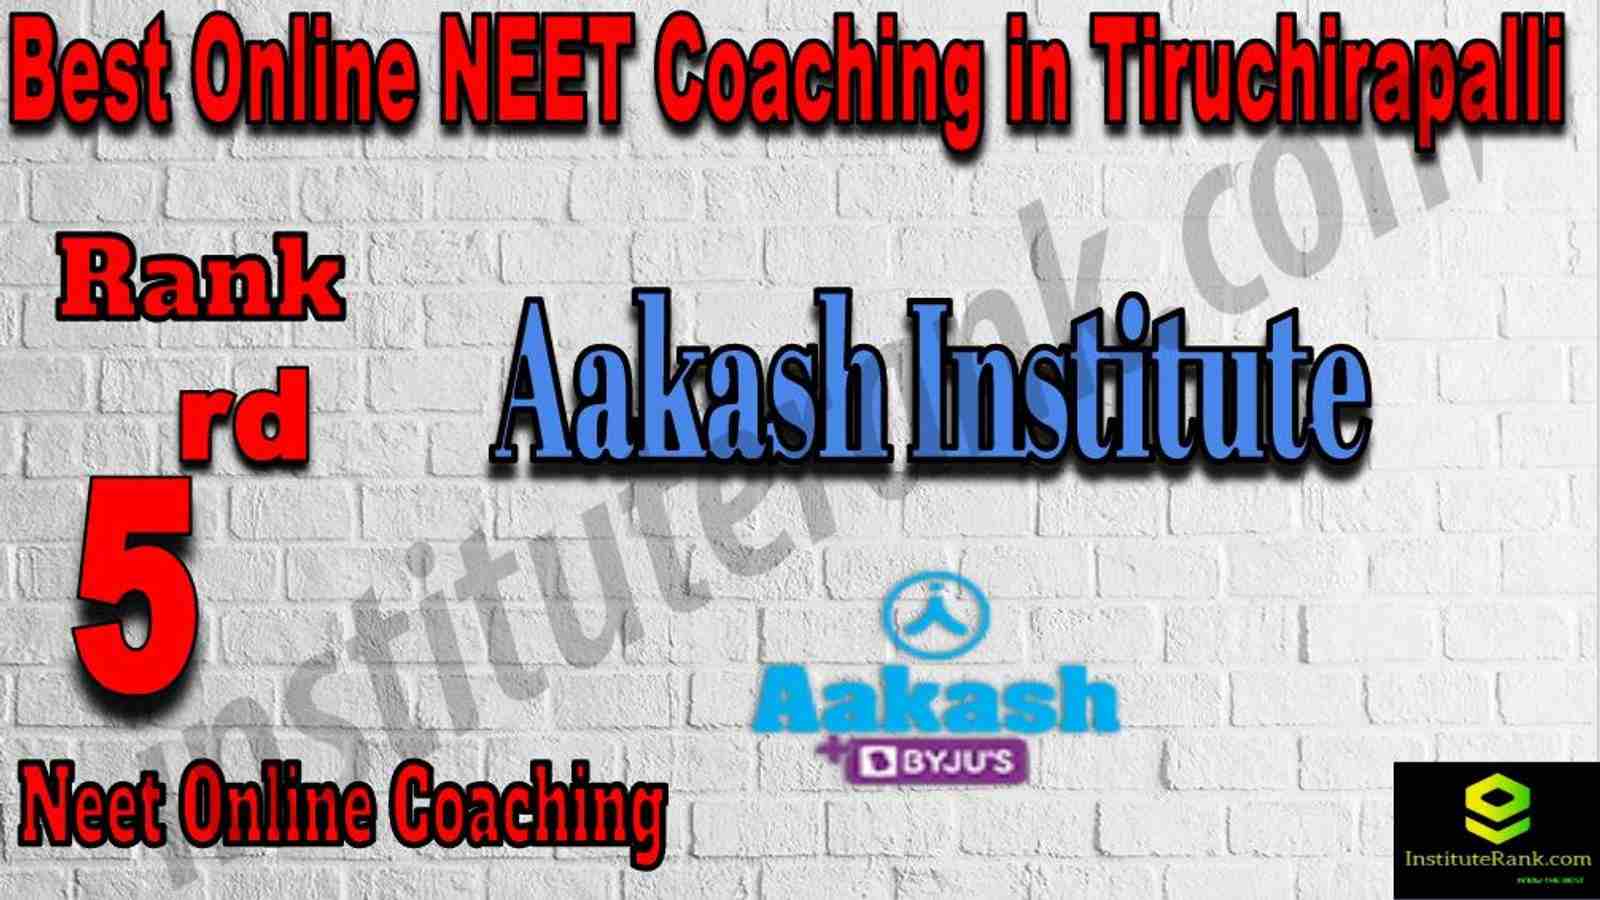 5th Best Online Neet Coaching in Tiruchirapalli